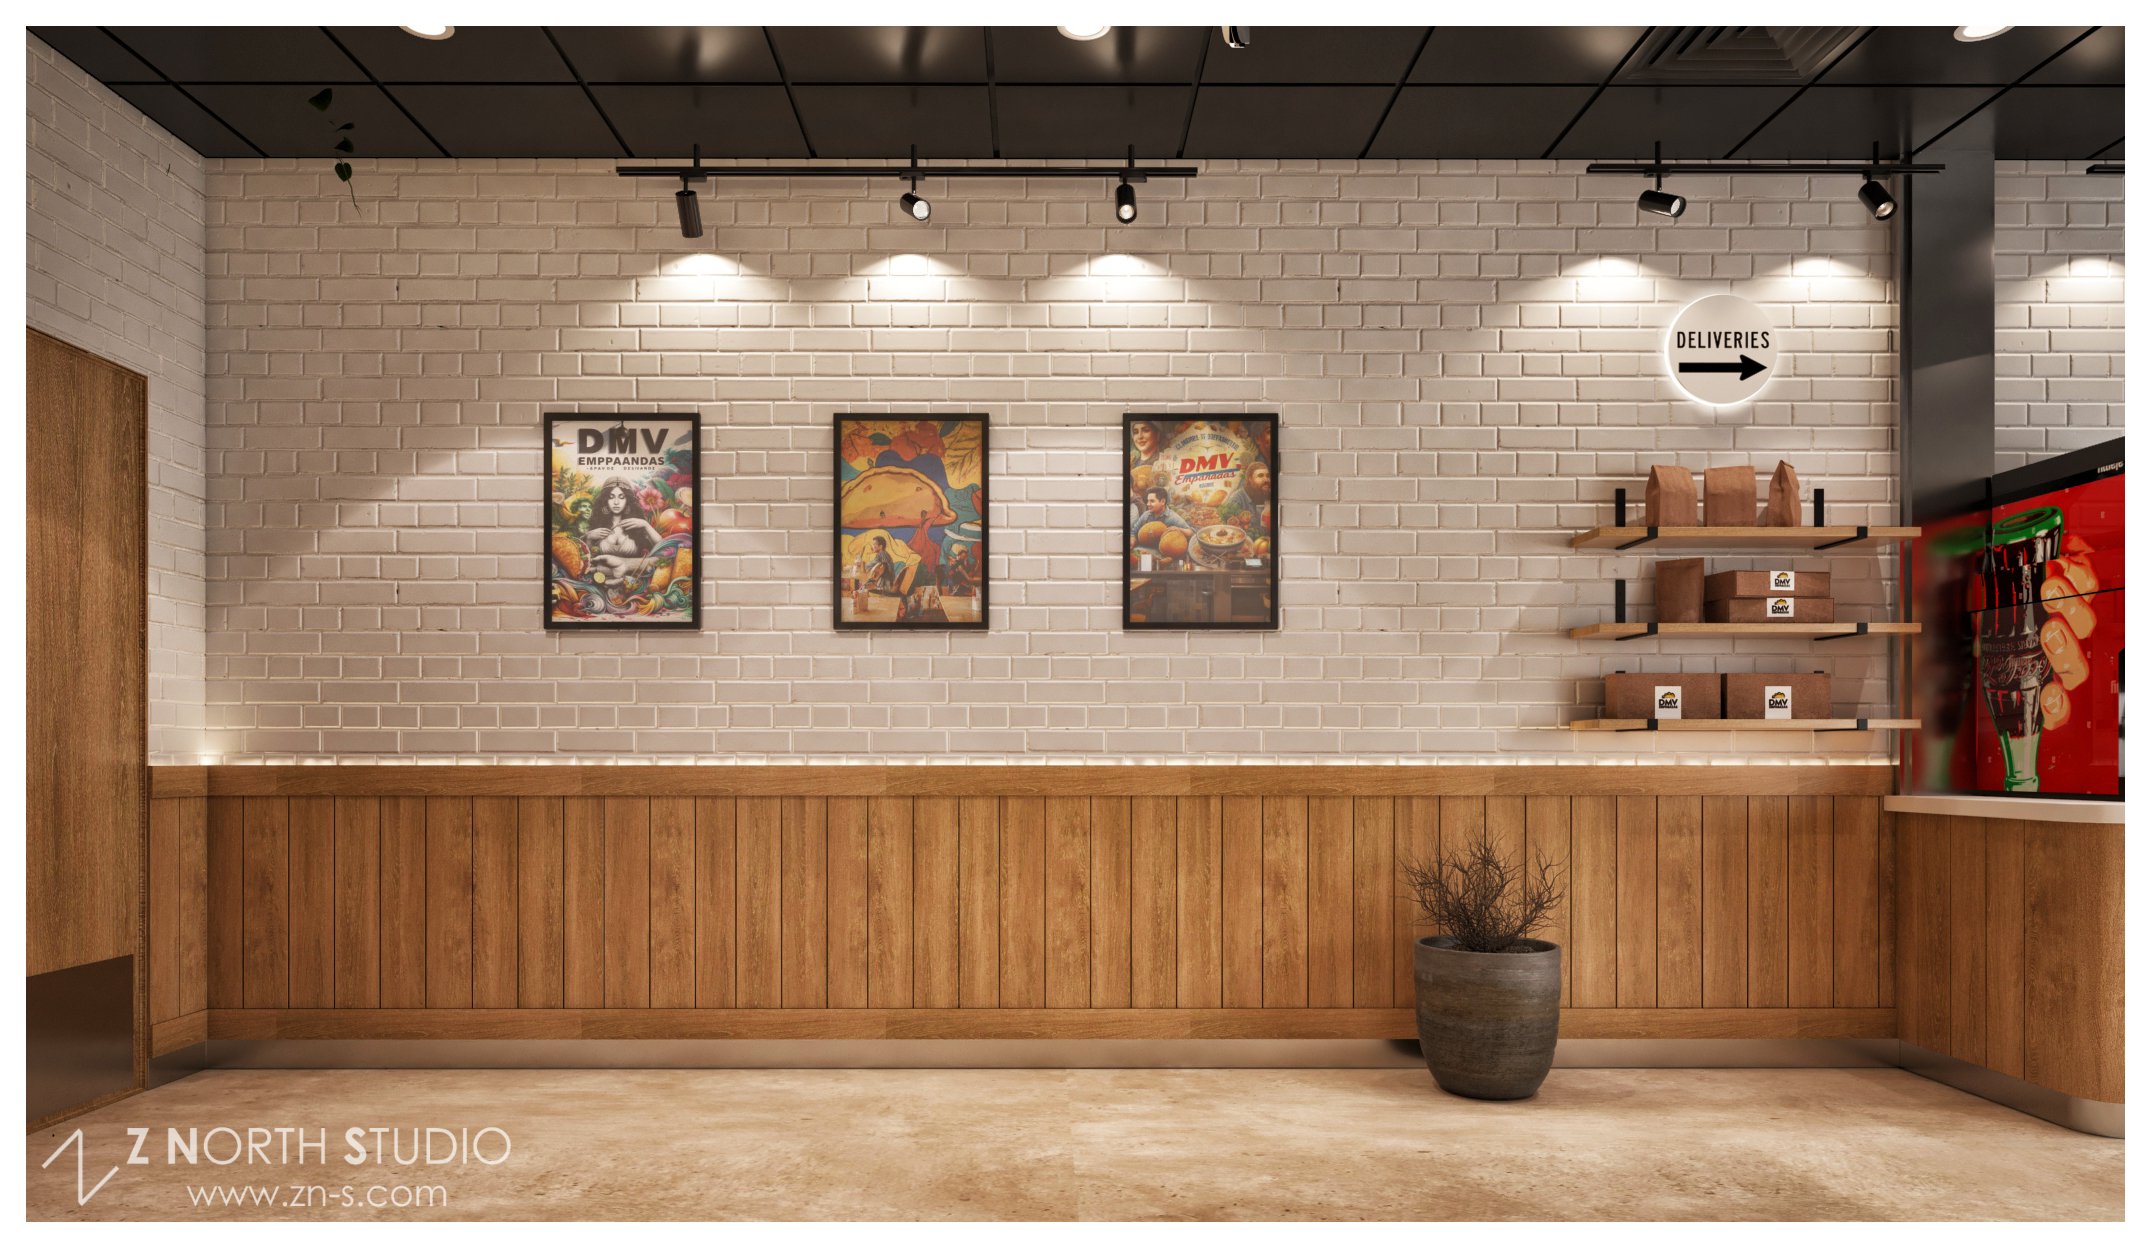 DMV Empanadas - Restaurant Interior Design - Z North Studio (6).jpg